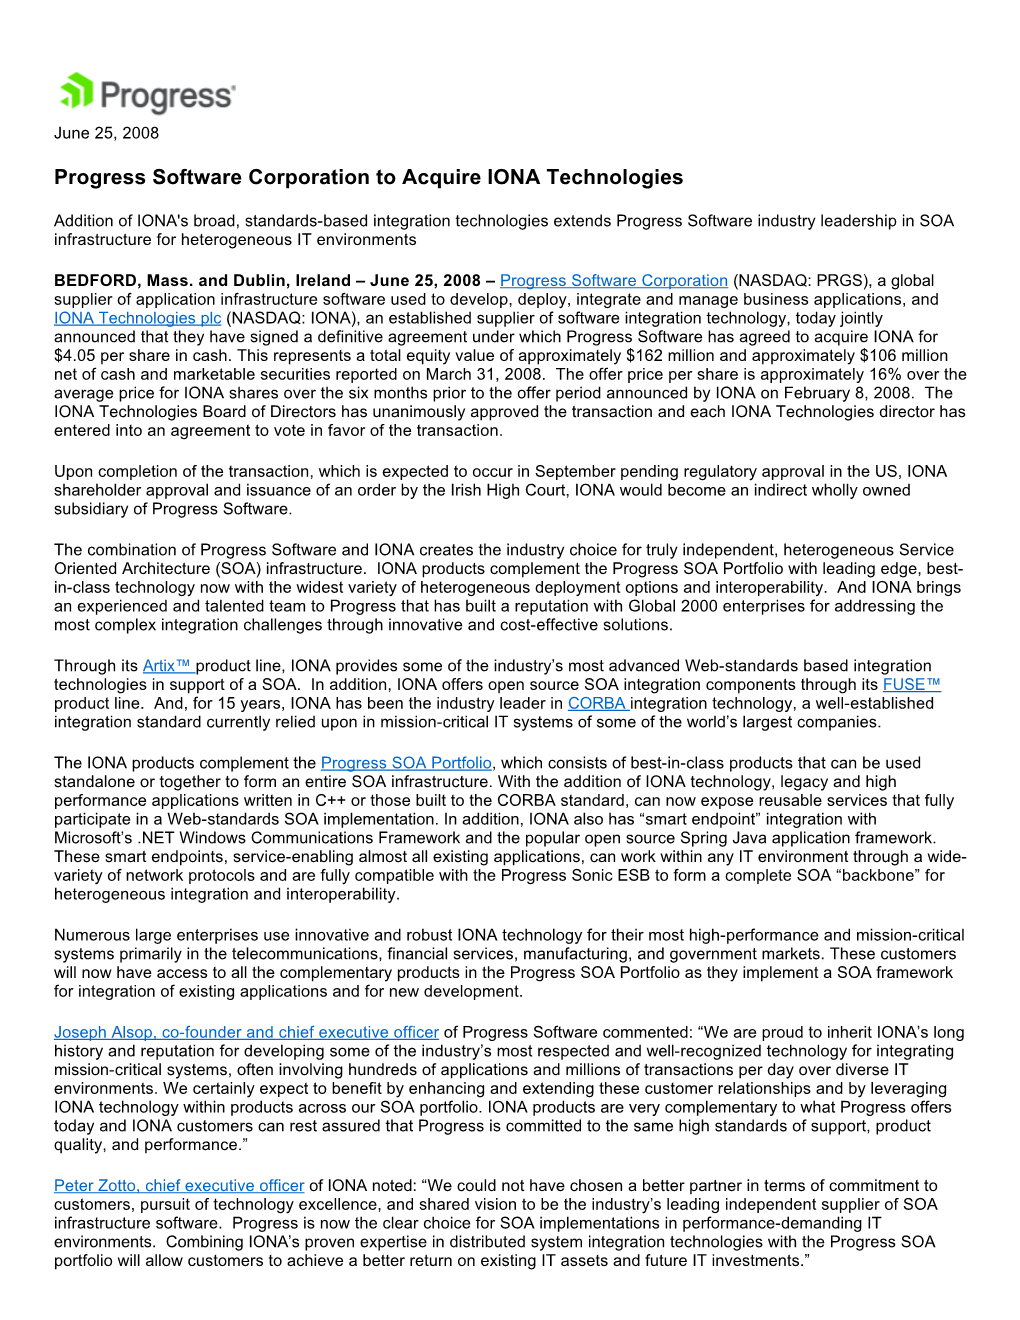 Progress Software Corporation to Acquire IONA Technologies